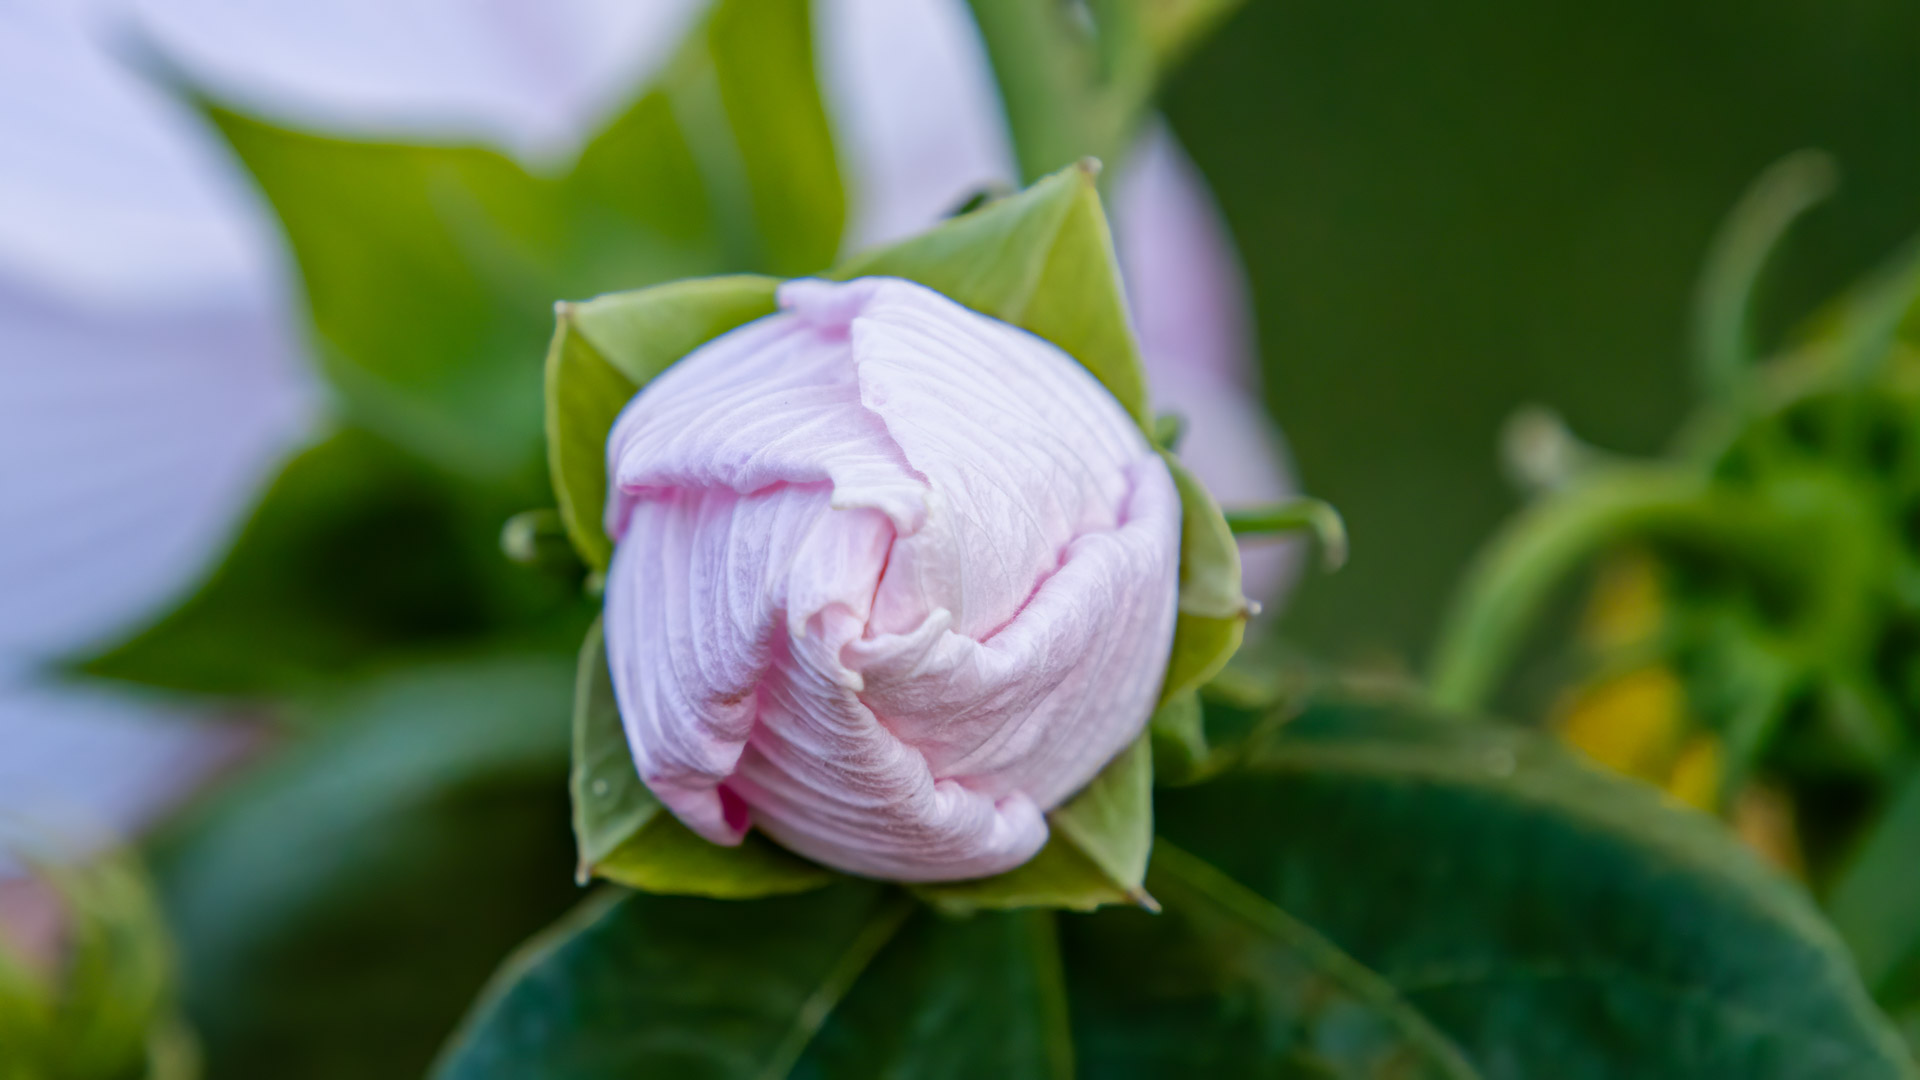 Immerse your desktop in visual splendor with our 4K white rose flower wallpaper.